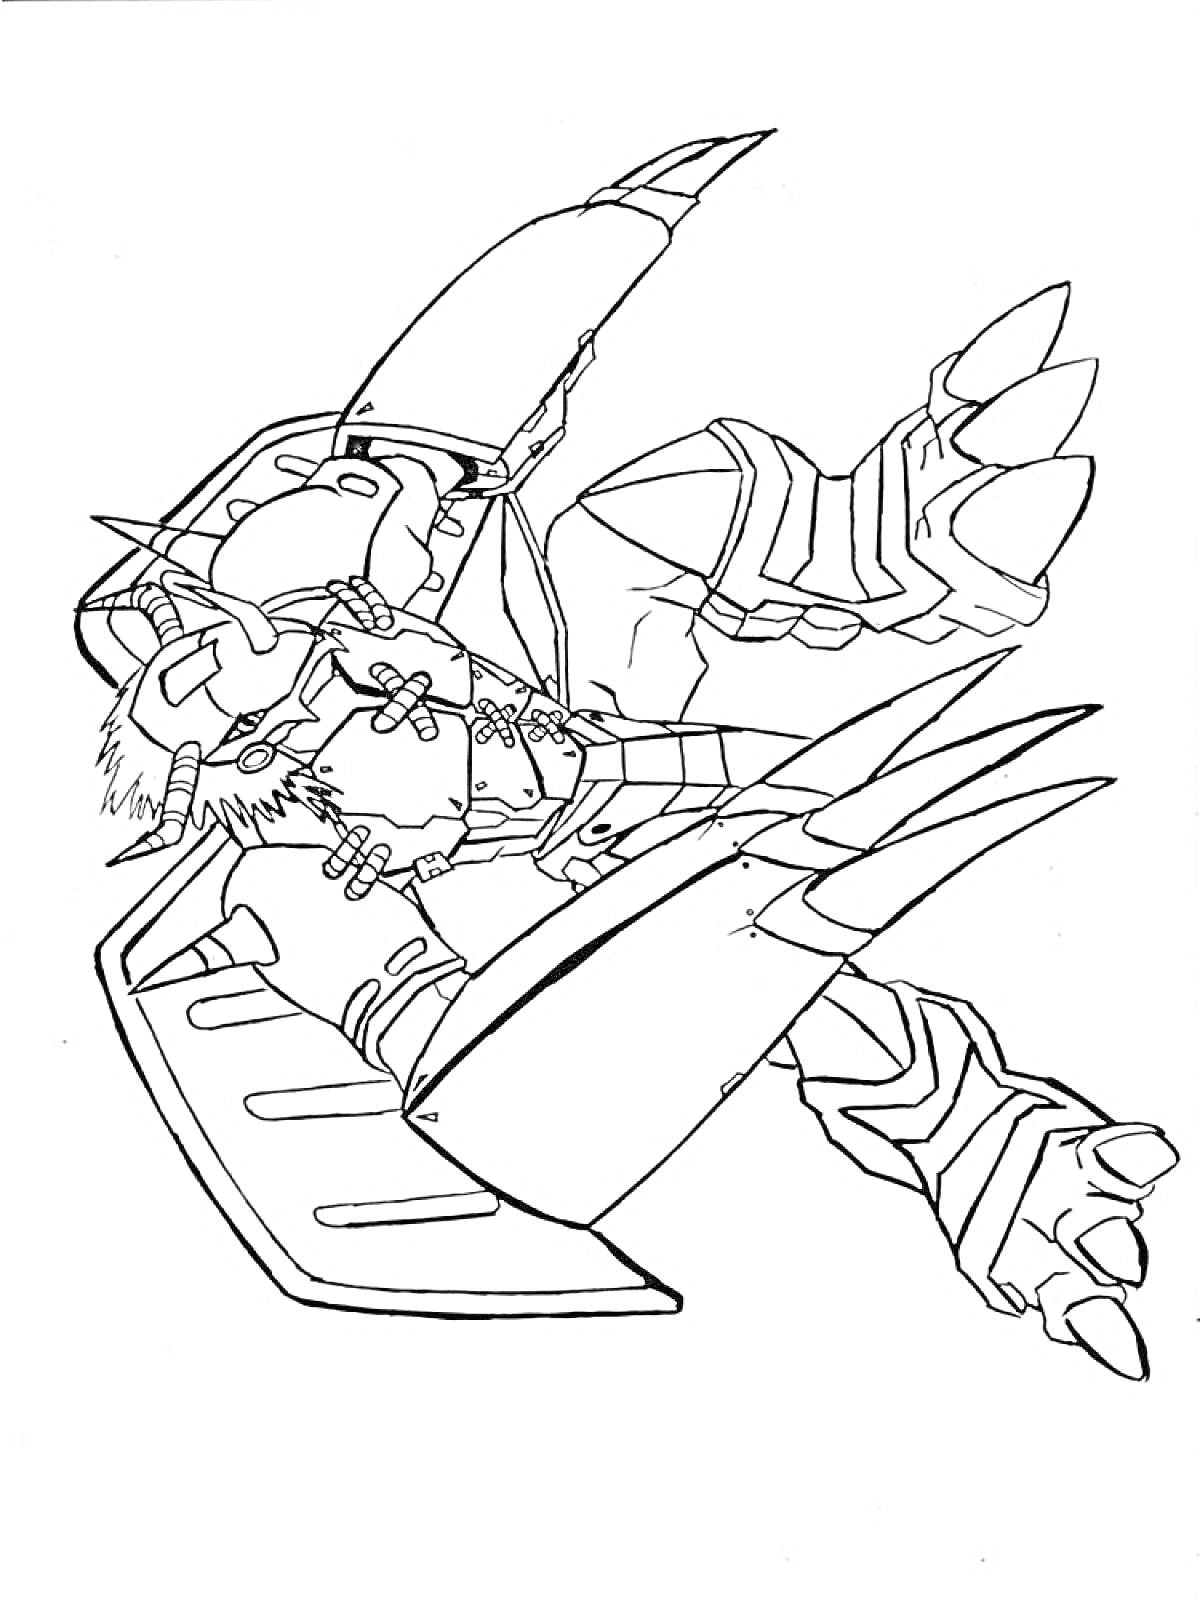 Раскраска Дигимон с крупными лапами, крыльями и шипами на теле